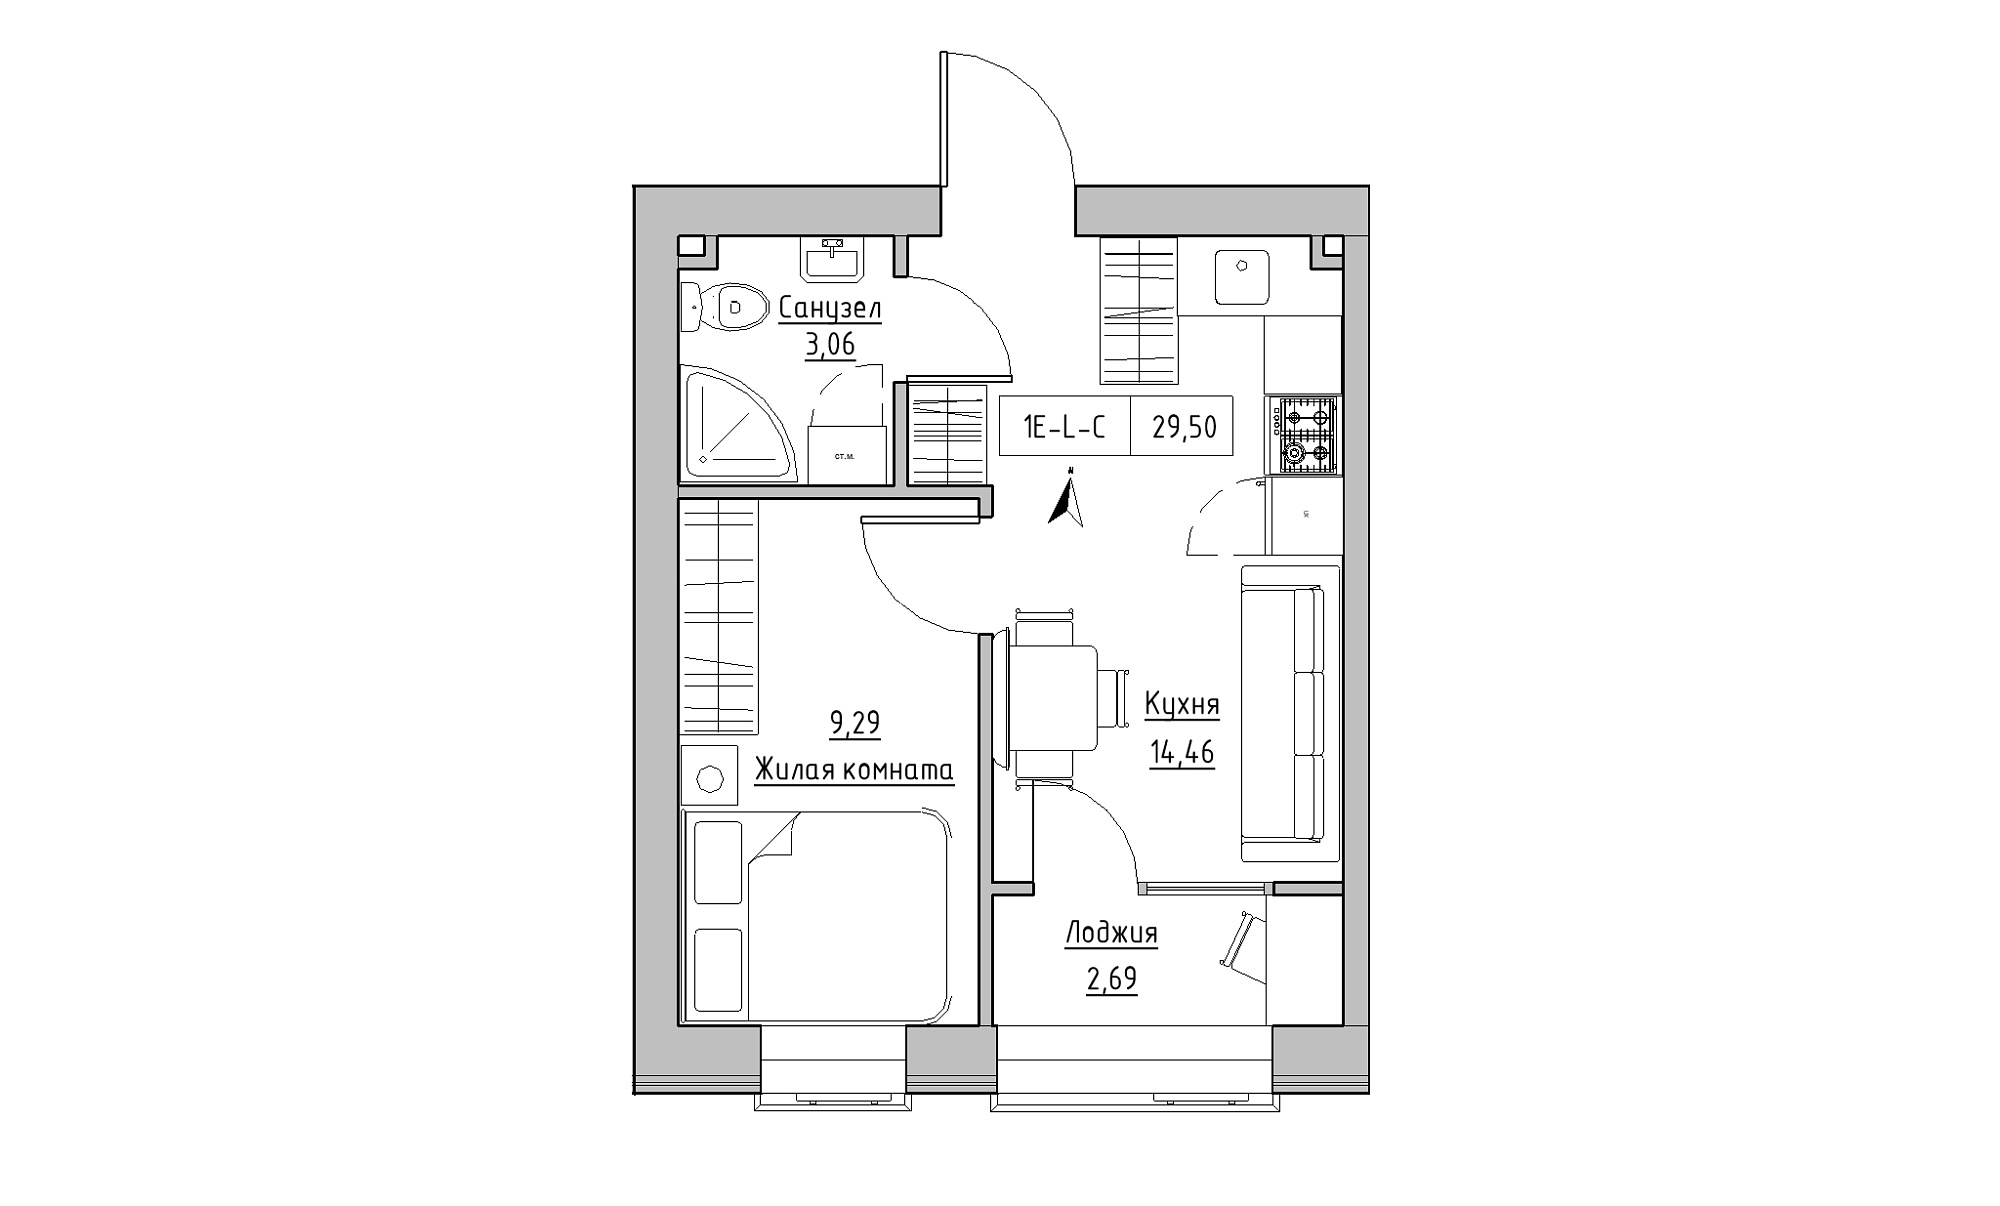 Planning 1-rm flats area 29.5m2, KS-023-01/0011.